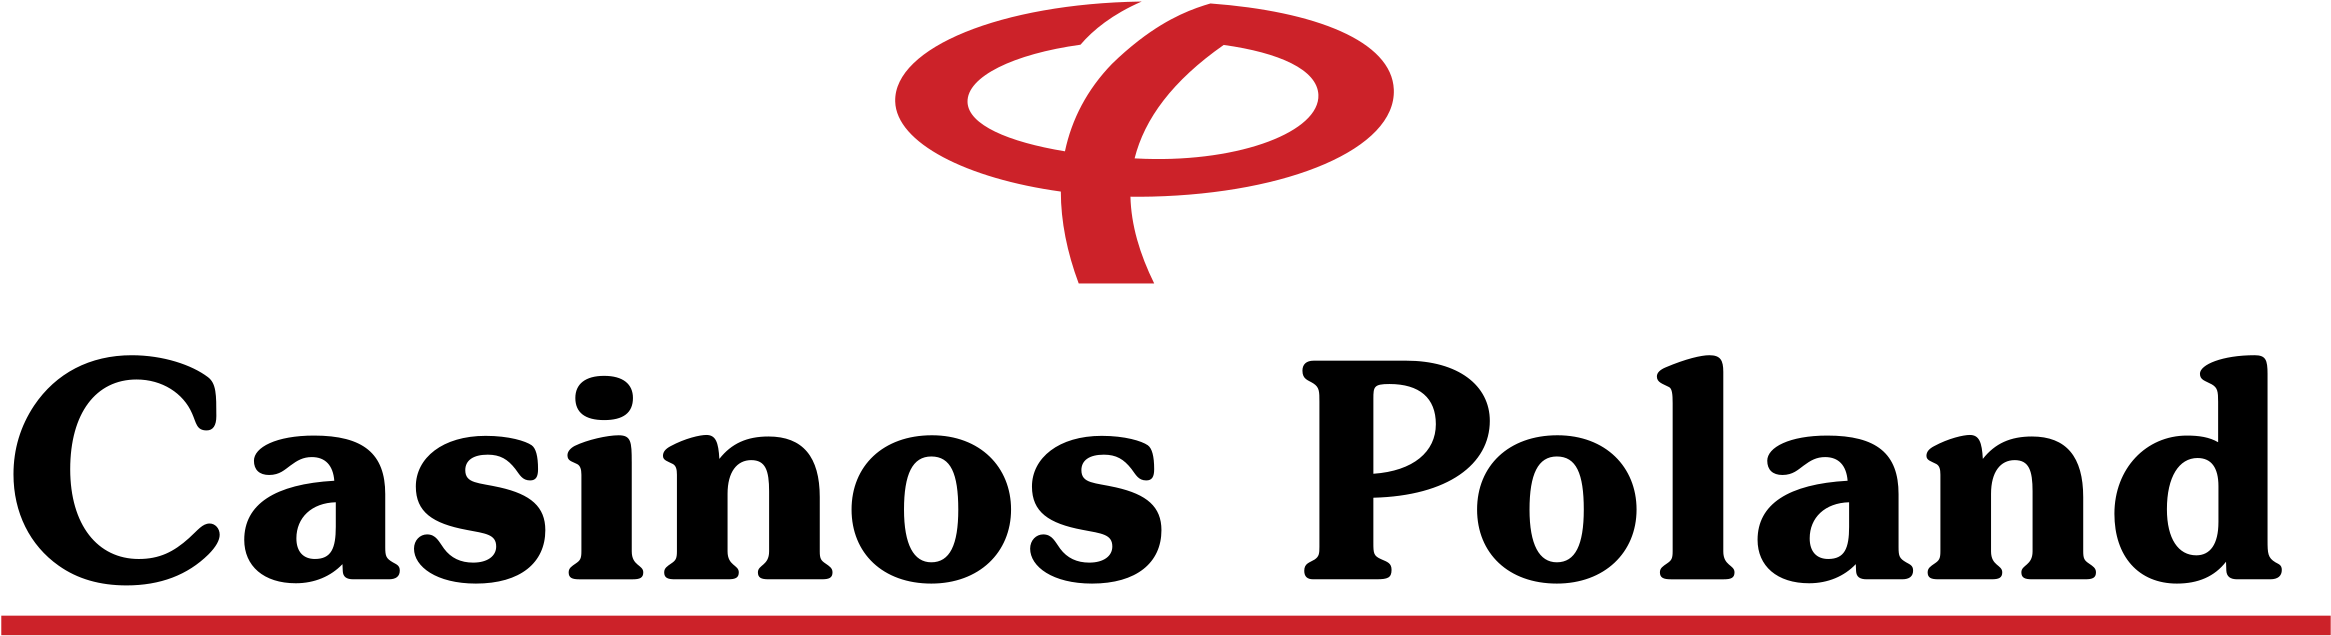 Casinos Poland Logo Png Transparent - Casinos Poland Logo Clipart (2400x2400), Png Download